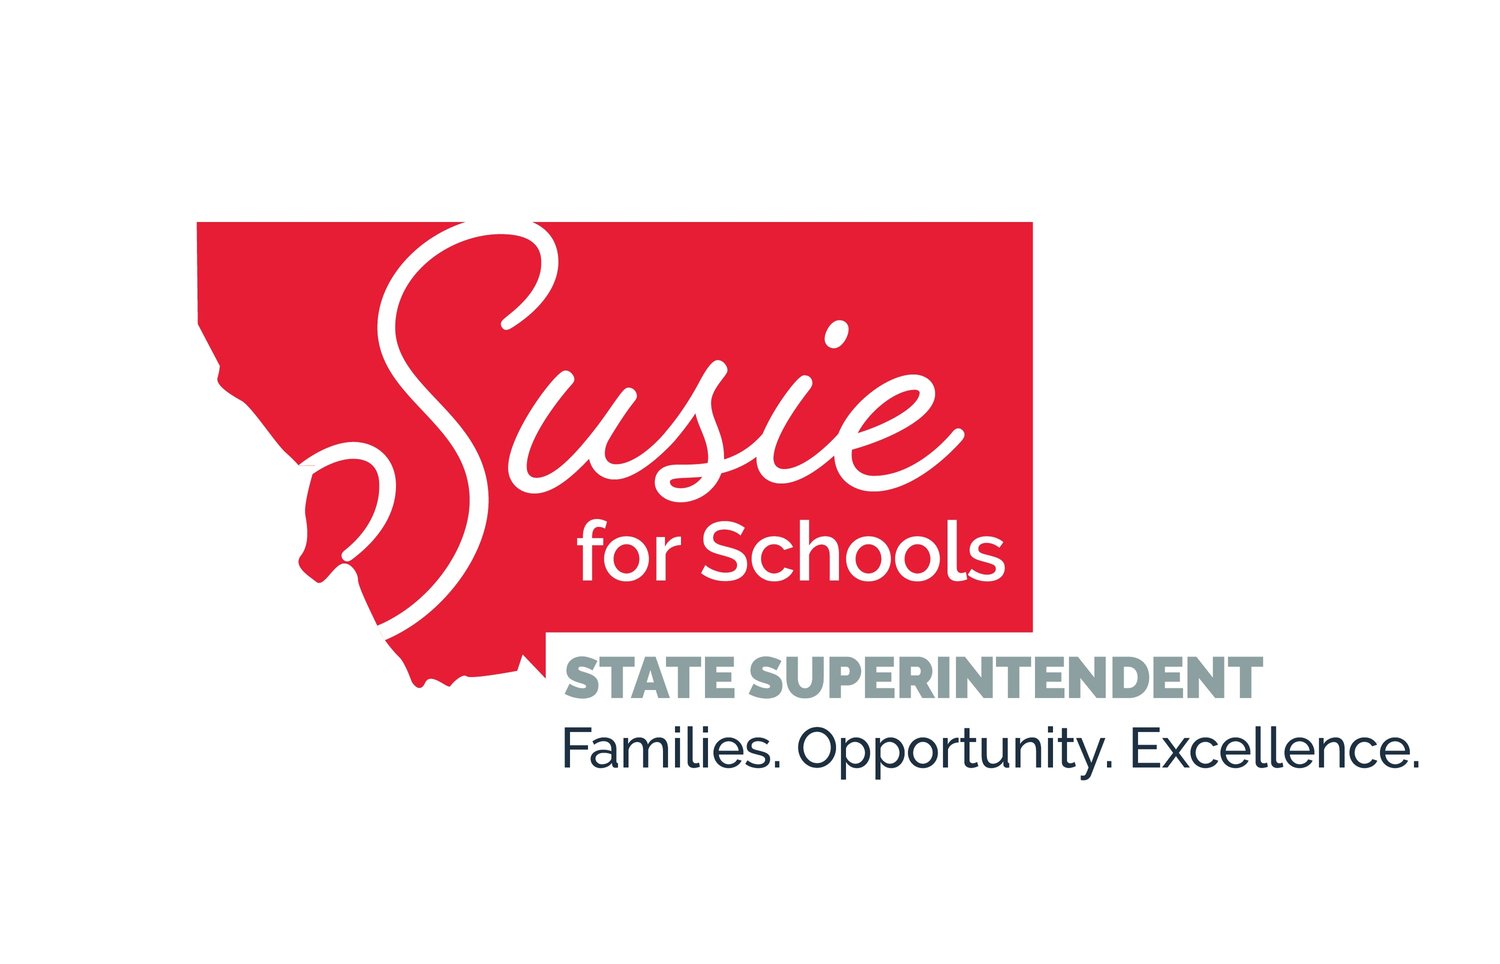 Susie for Schools